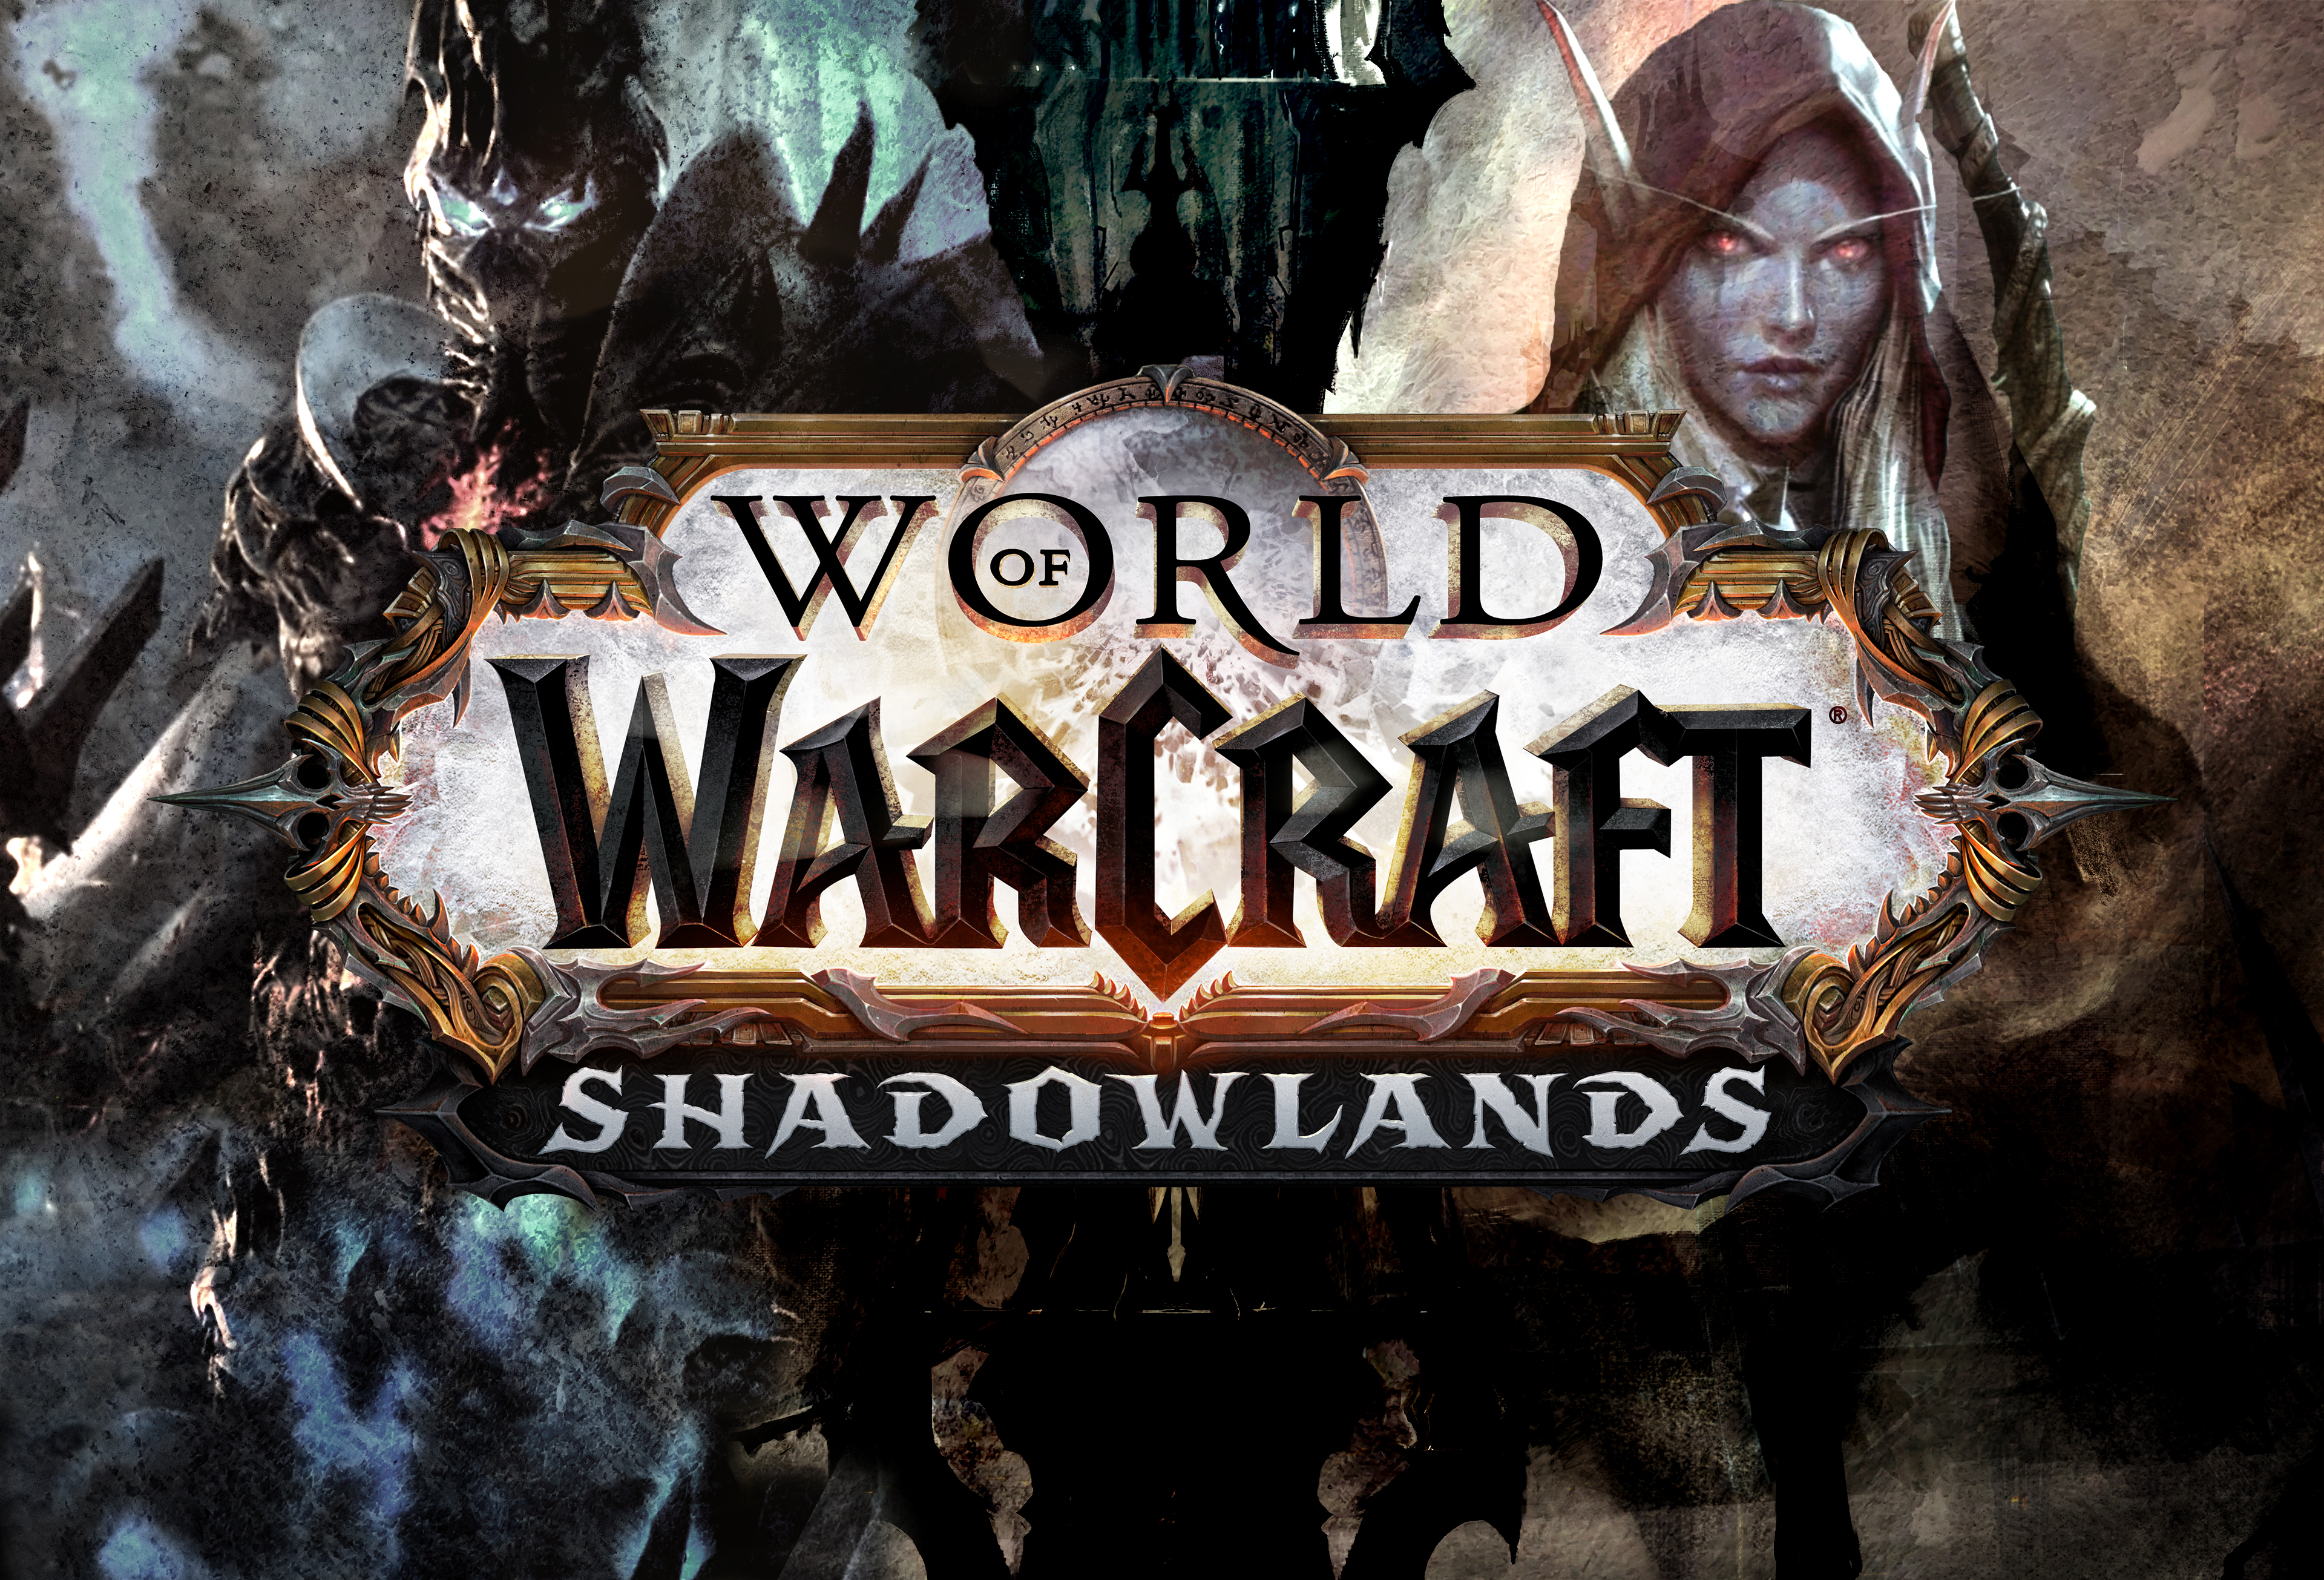 World of Warcraft Shadowlands Wallpaper by counterfluxart on DeviantArt